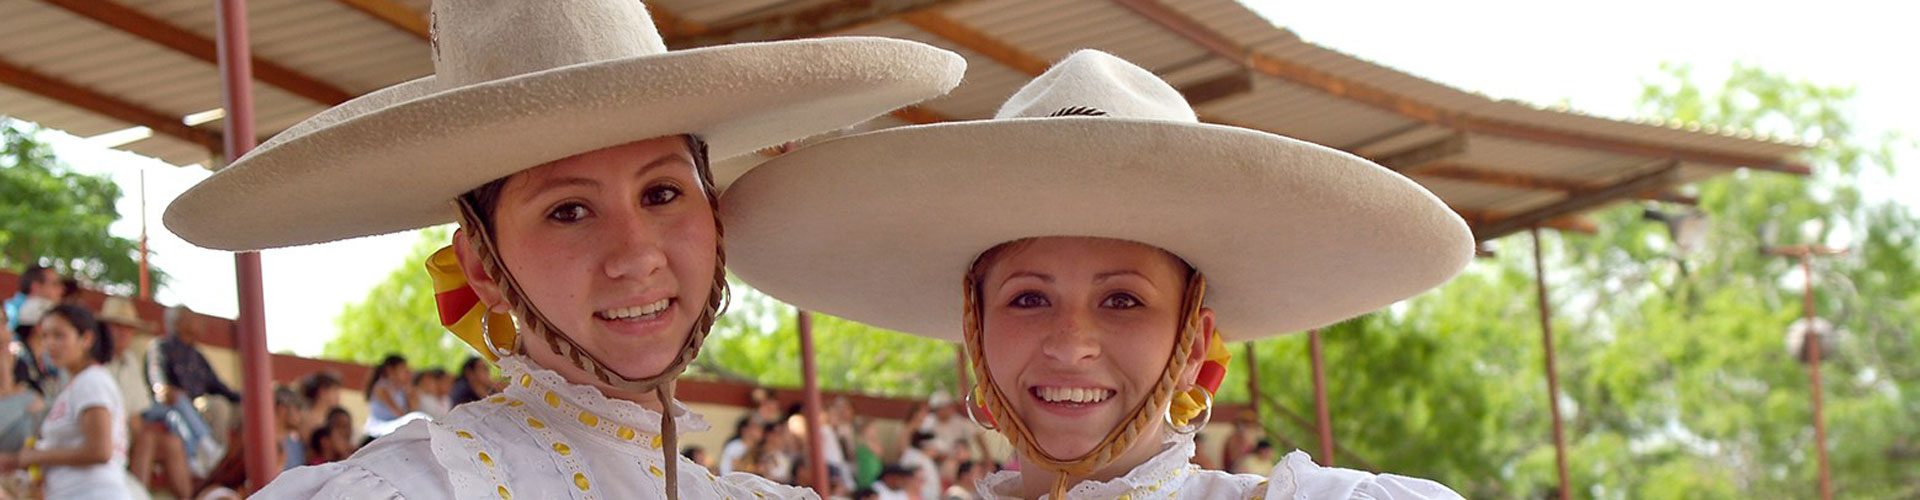 Mexican Rodeo, San Antonio. Texas